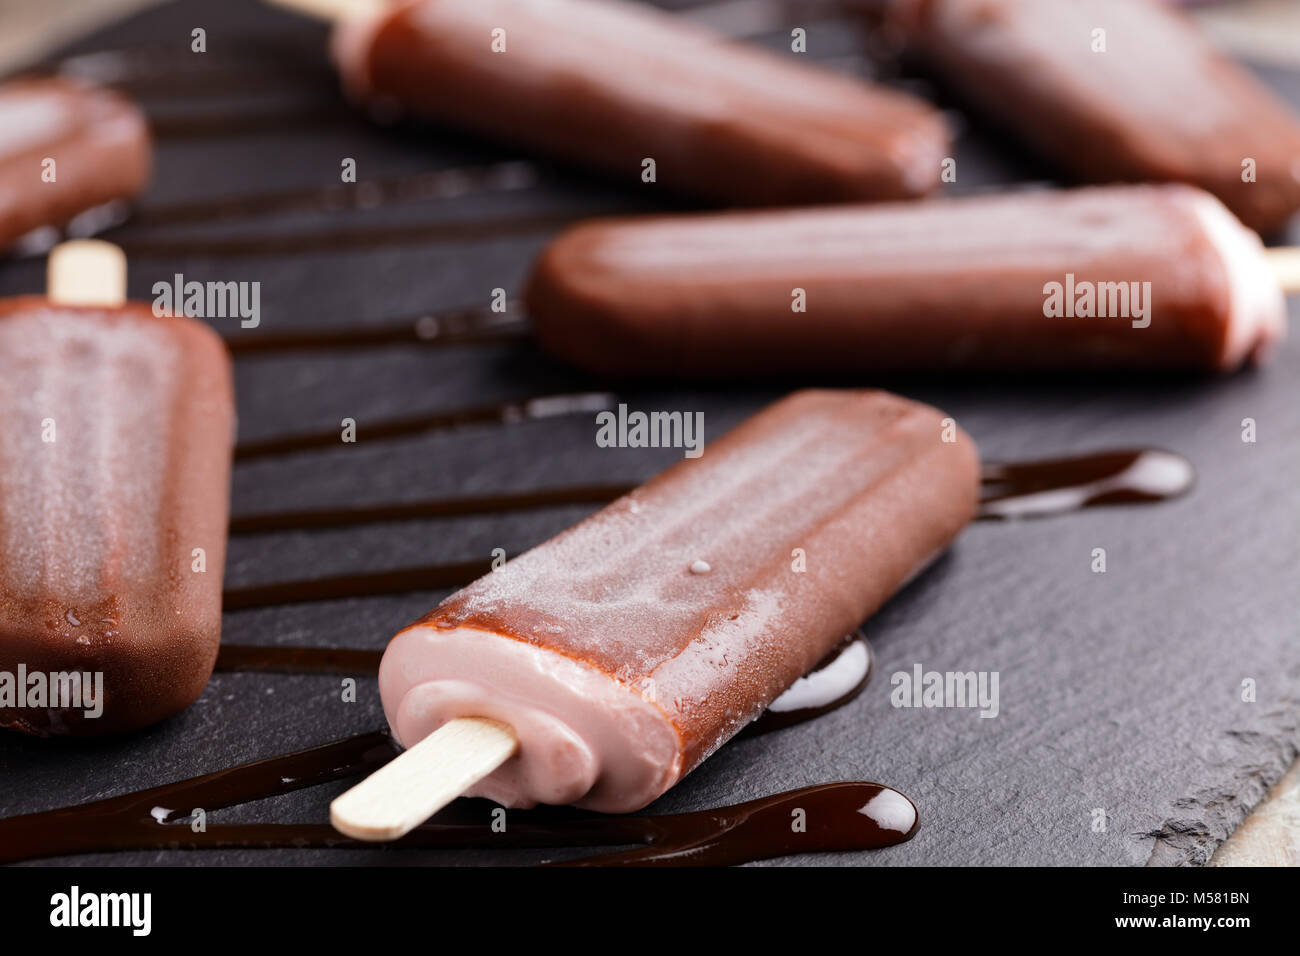 Ice cream bars coated with chocolate on a slate board Stock Photo